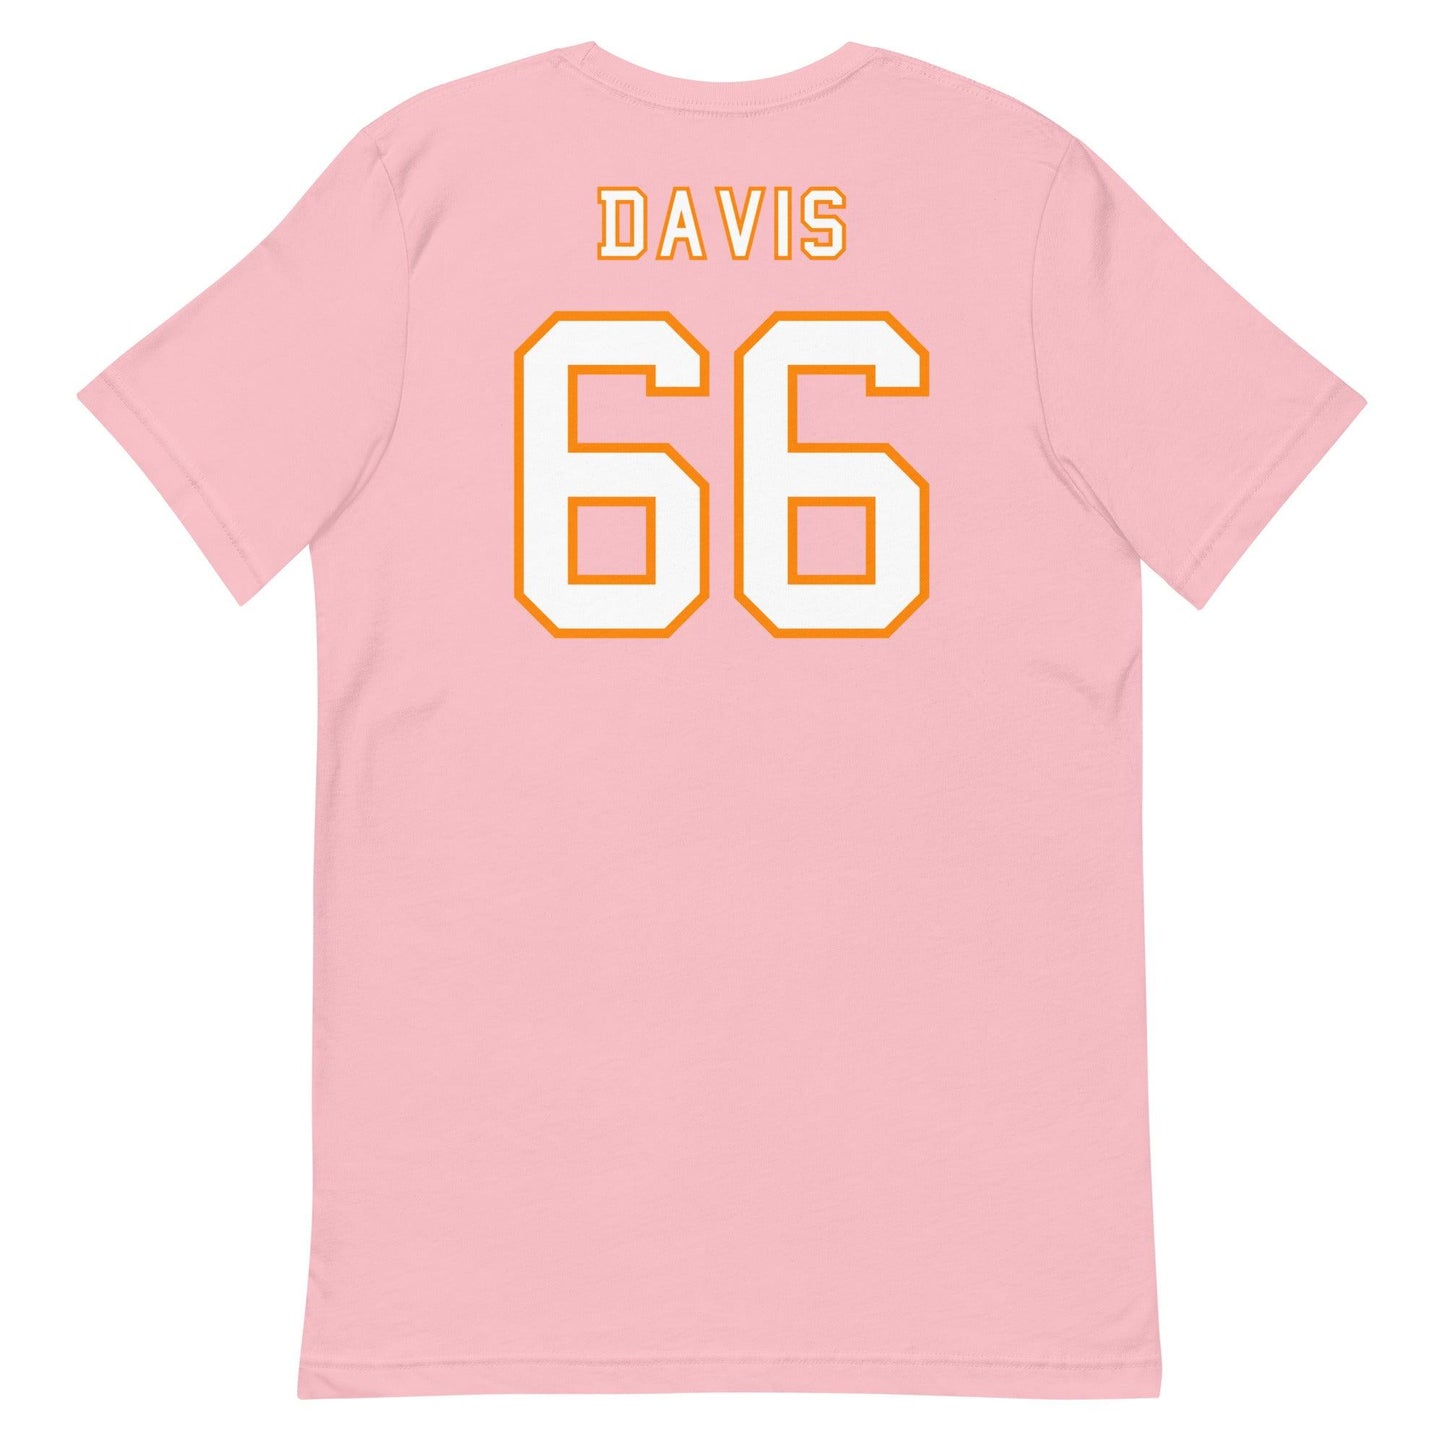 Dayne Davis "Jersey" t-shirt - Fan Arch